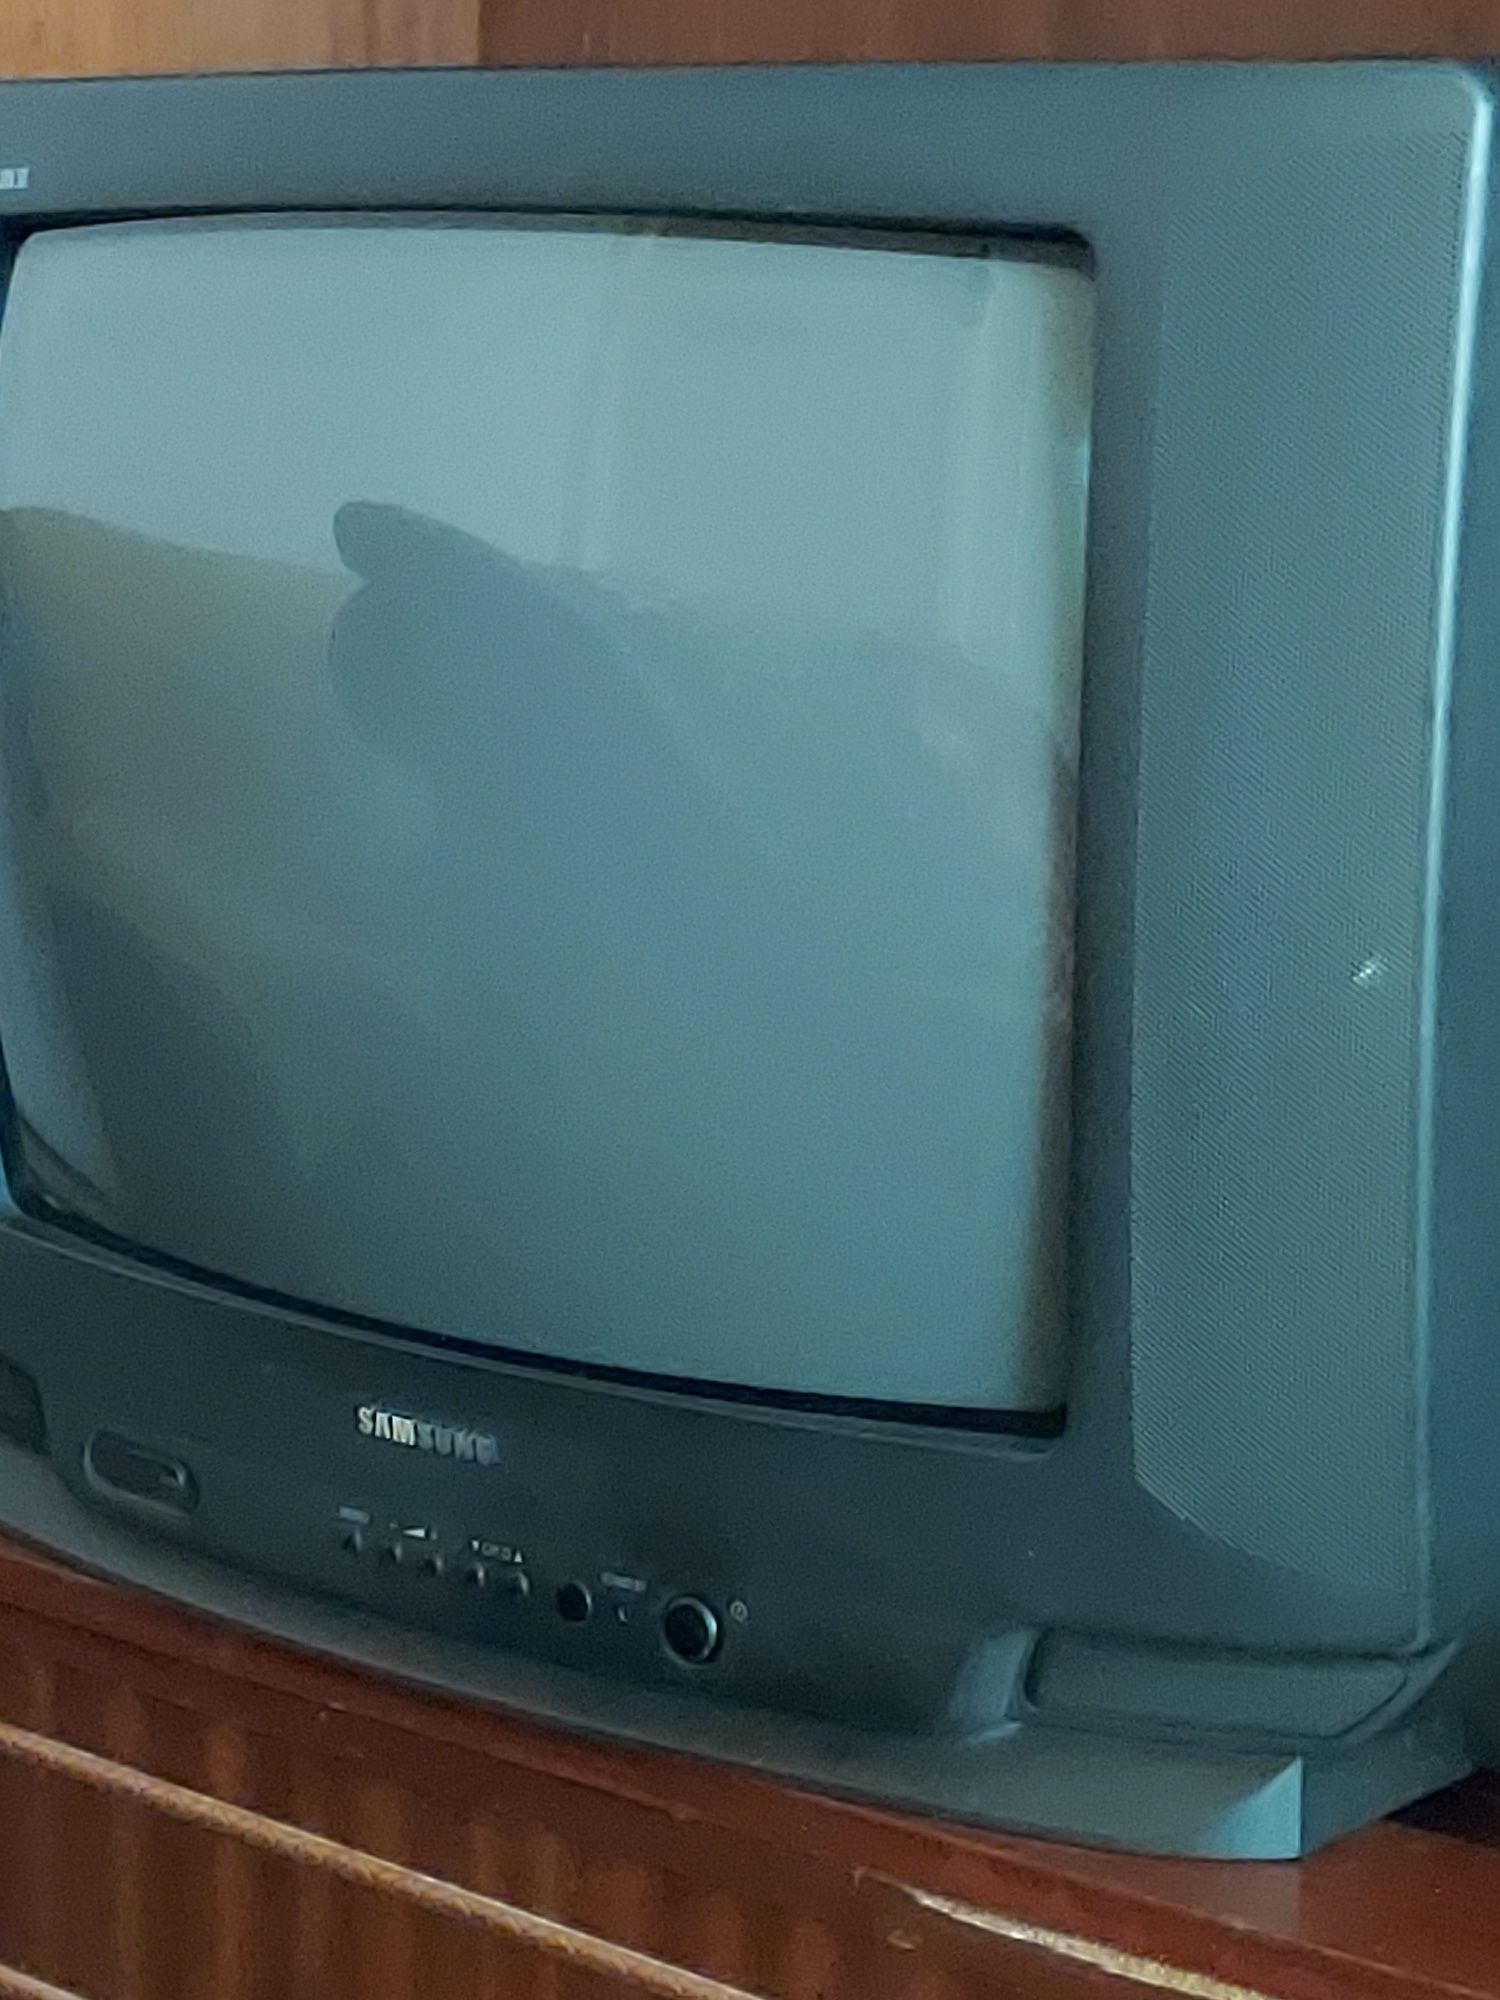 Телевизор 'Самсунг", недорого продаю или на запчасти